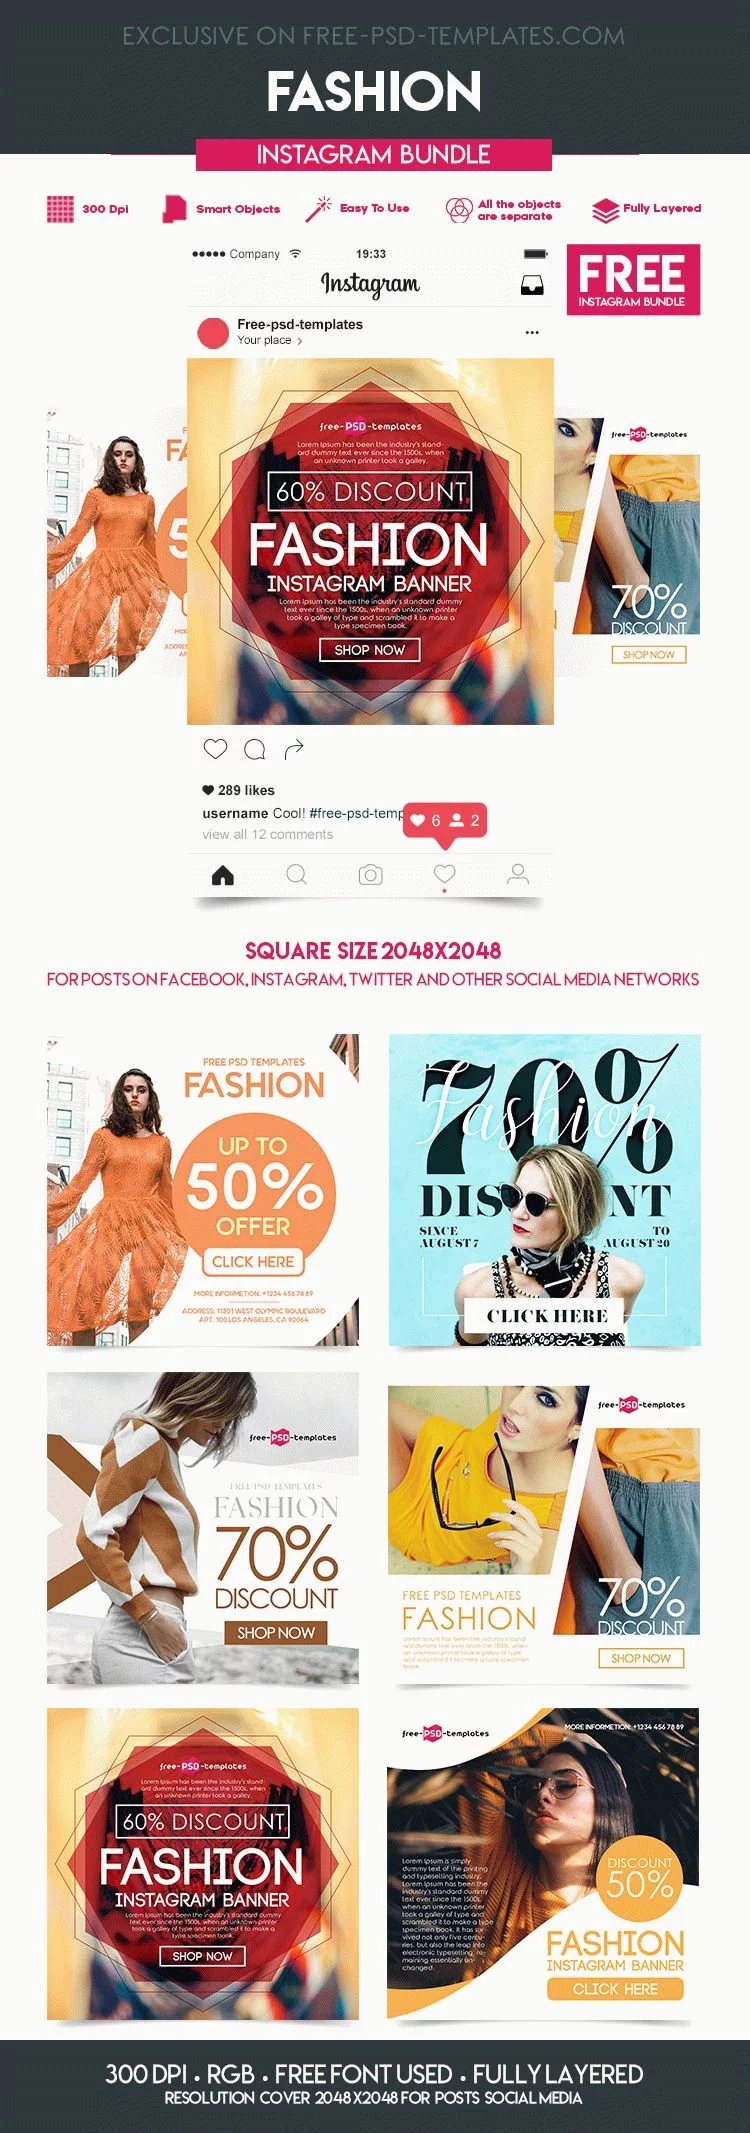 Free Fashion Instagram Banners Bundle